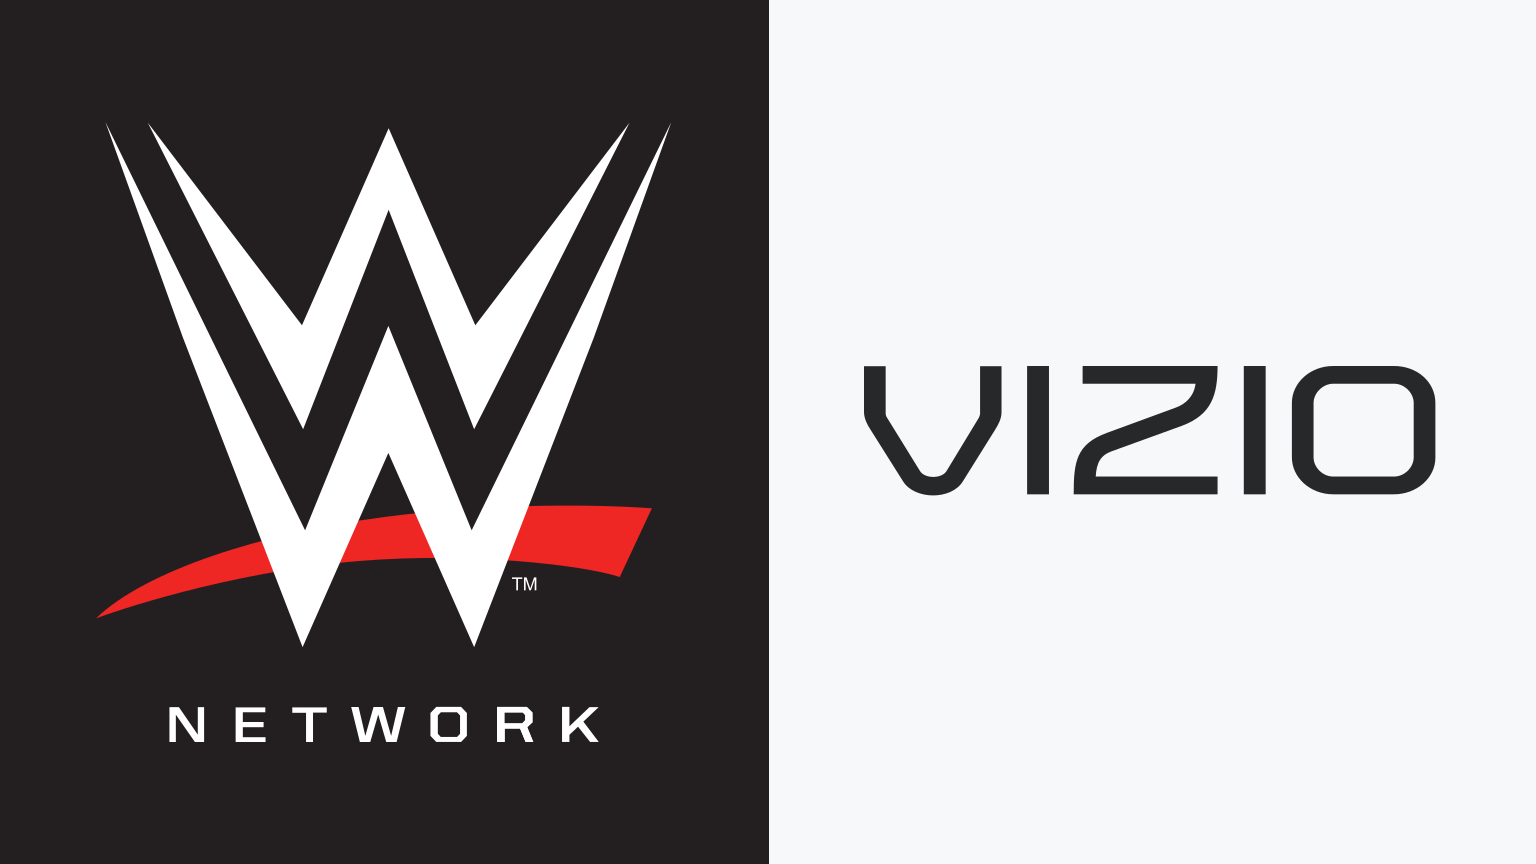 How to Watch WWE Network on VIZIO Smart TV